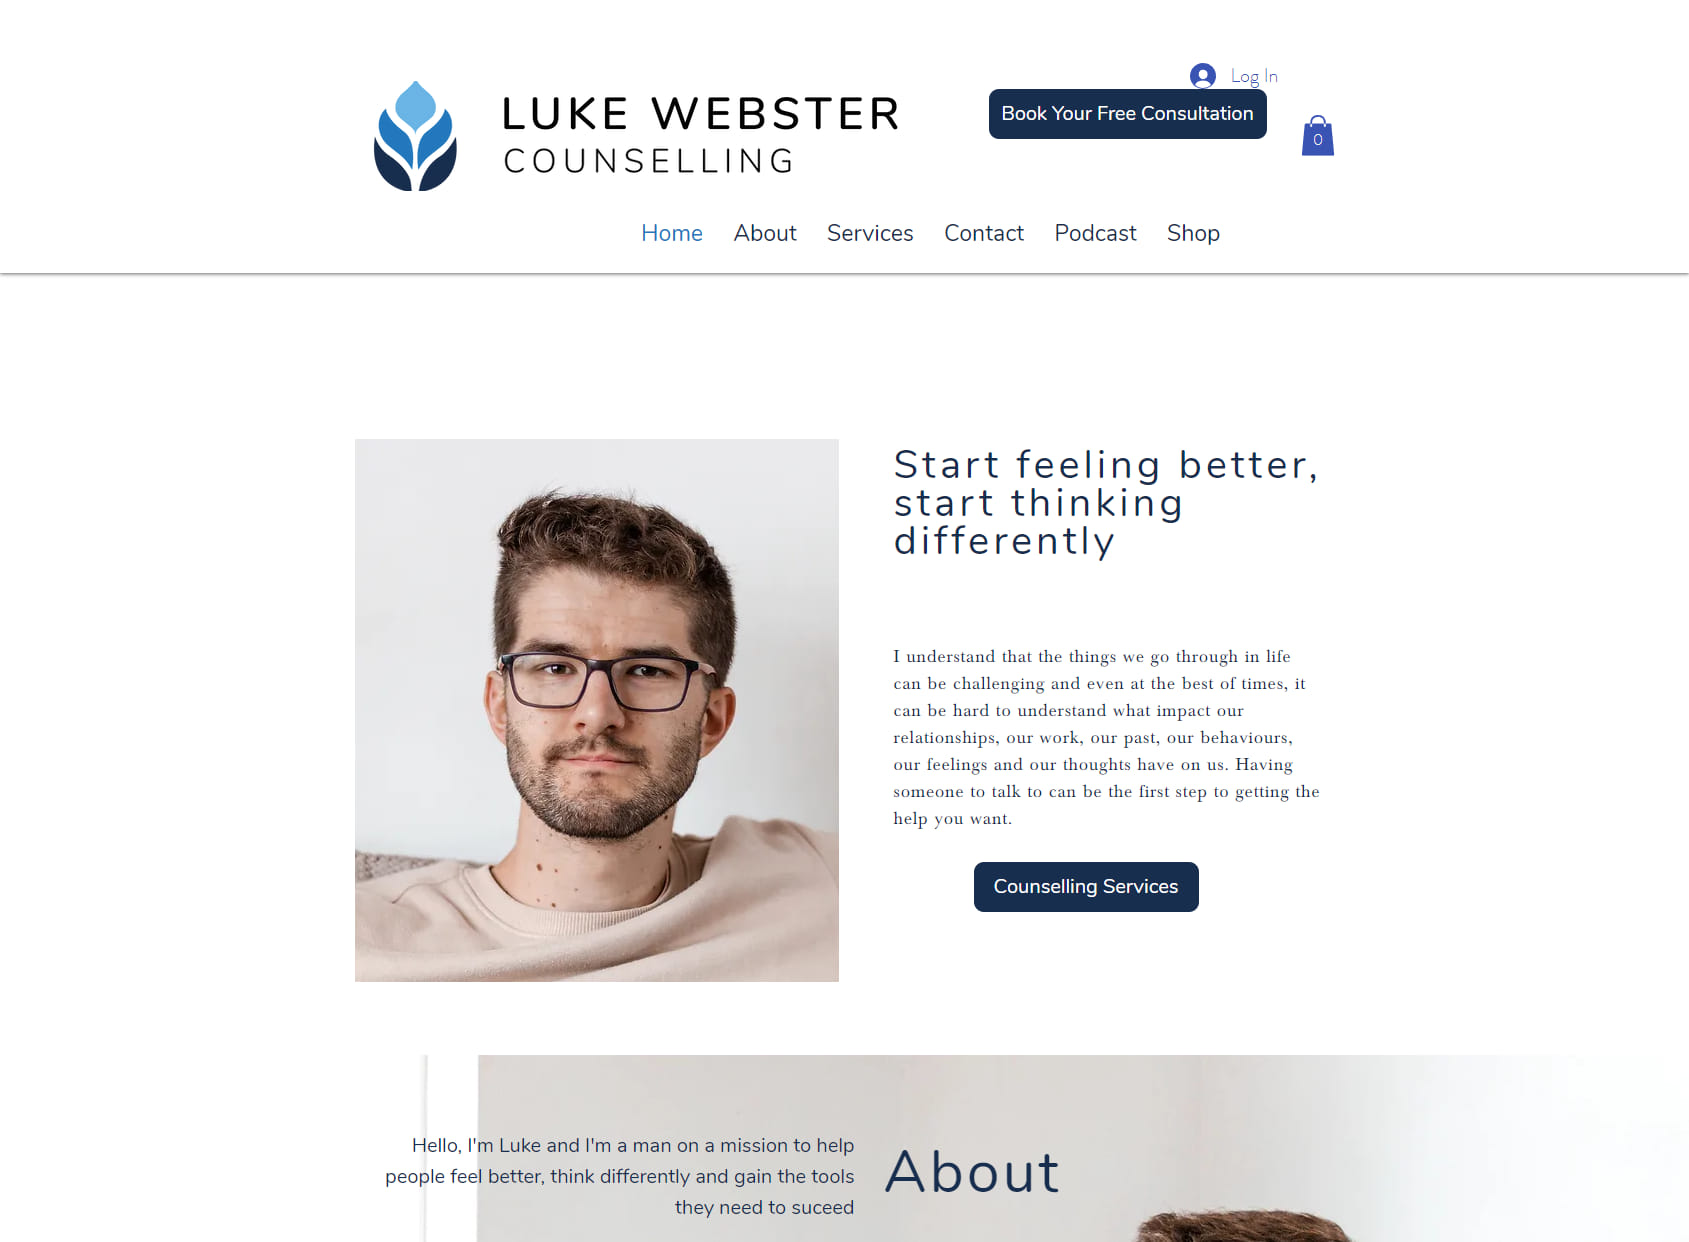 Luke Webster Counselling